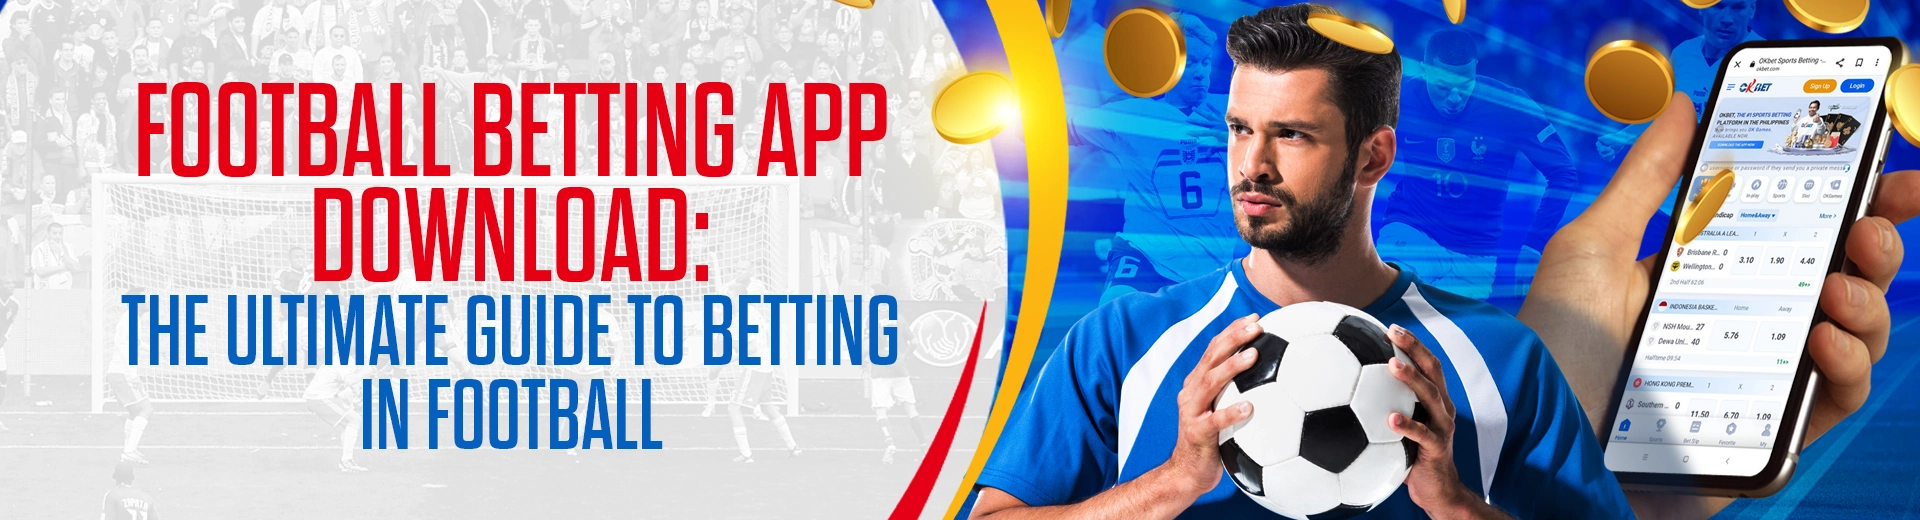 OKBet Download Football Betting App